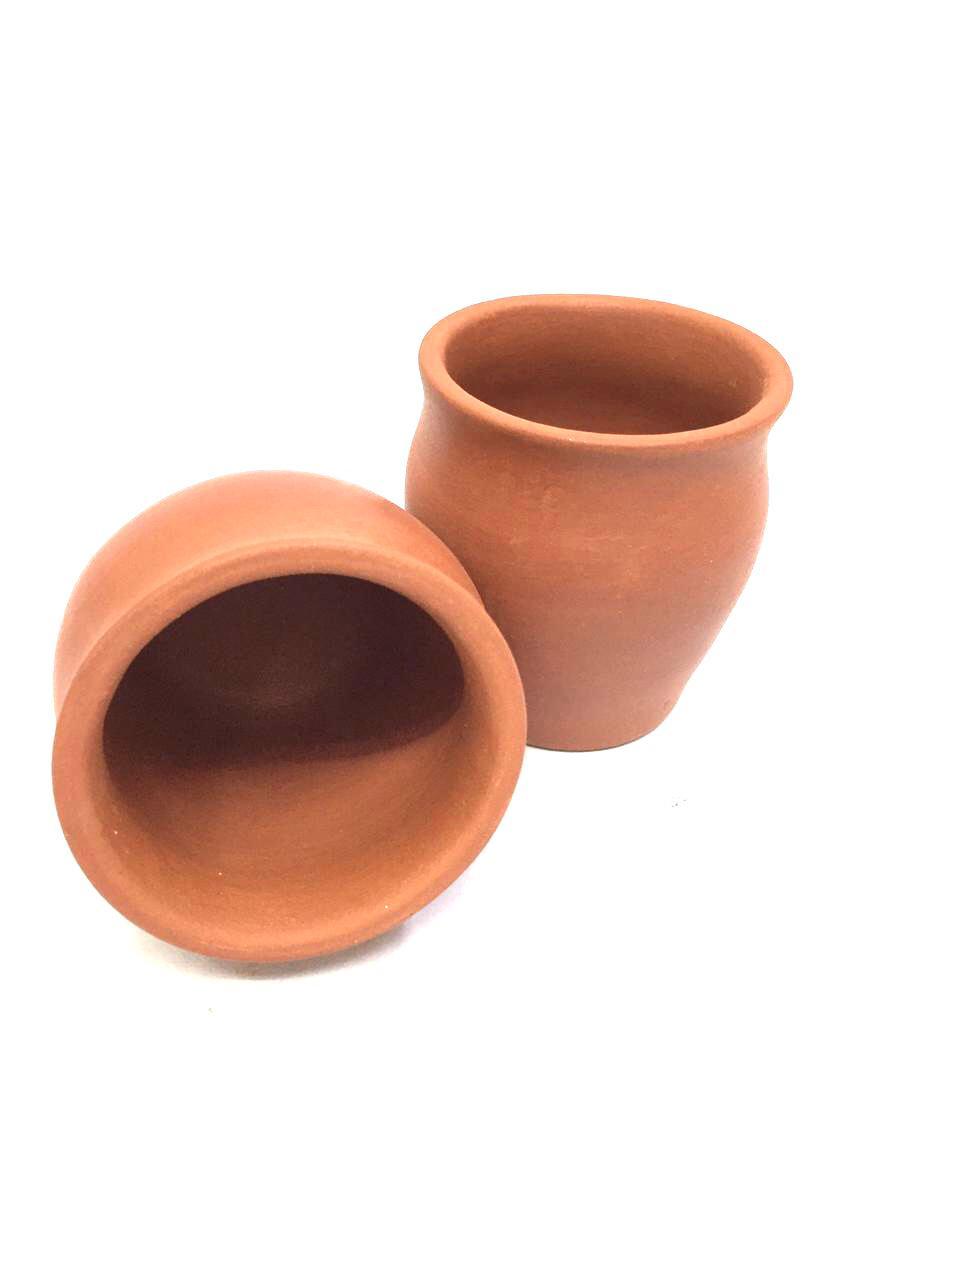 Standard Terracotta Kulhads In Plain & Glazed Set Of 6 Earthenware Tamrapatra